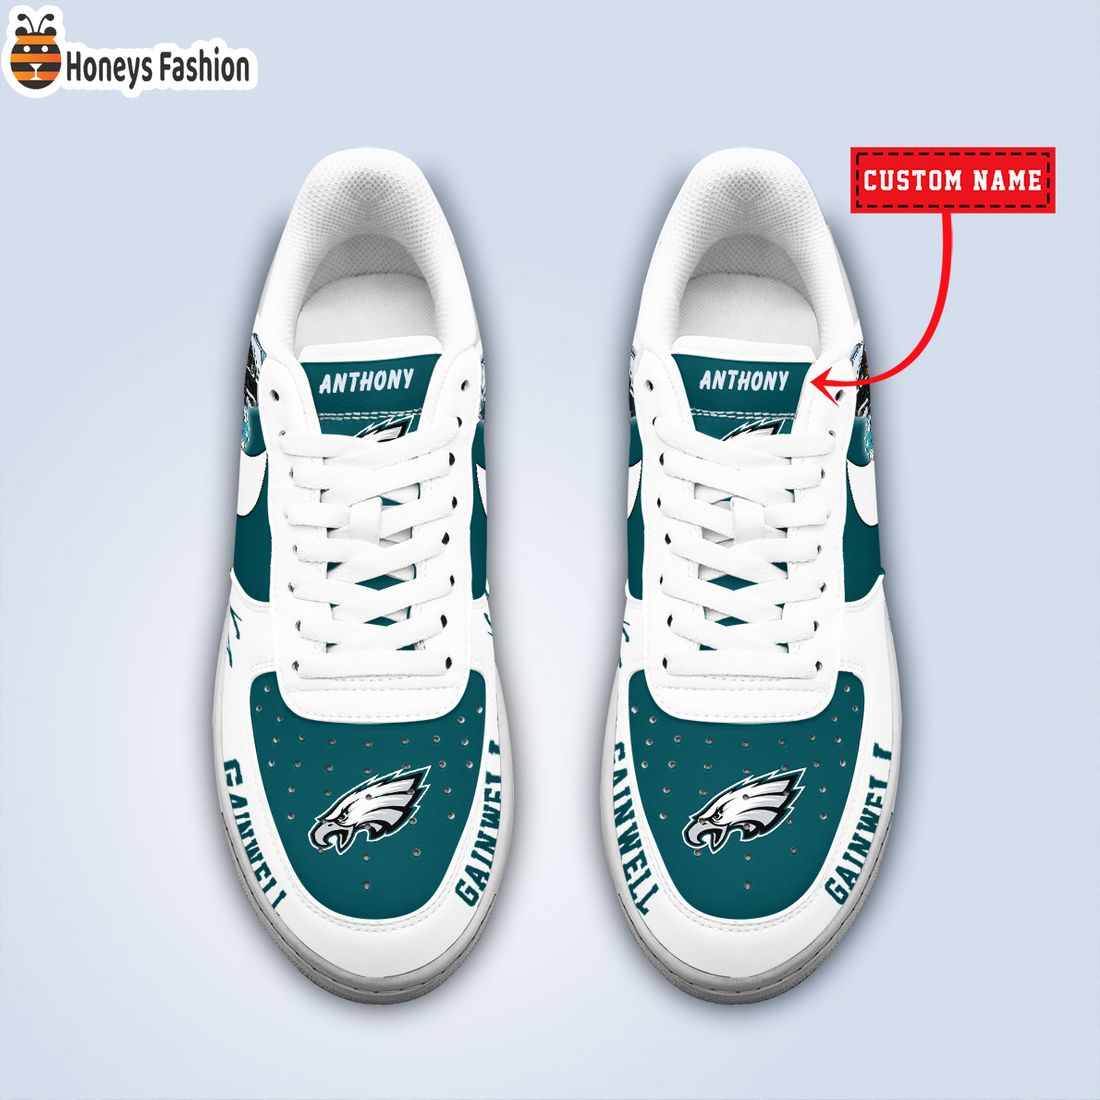 TOP SELLER Kenneth Gainwell Philadelphia Eagles NFL Custom Name Nike Air Force Shoes